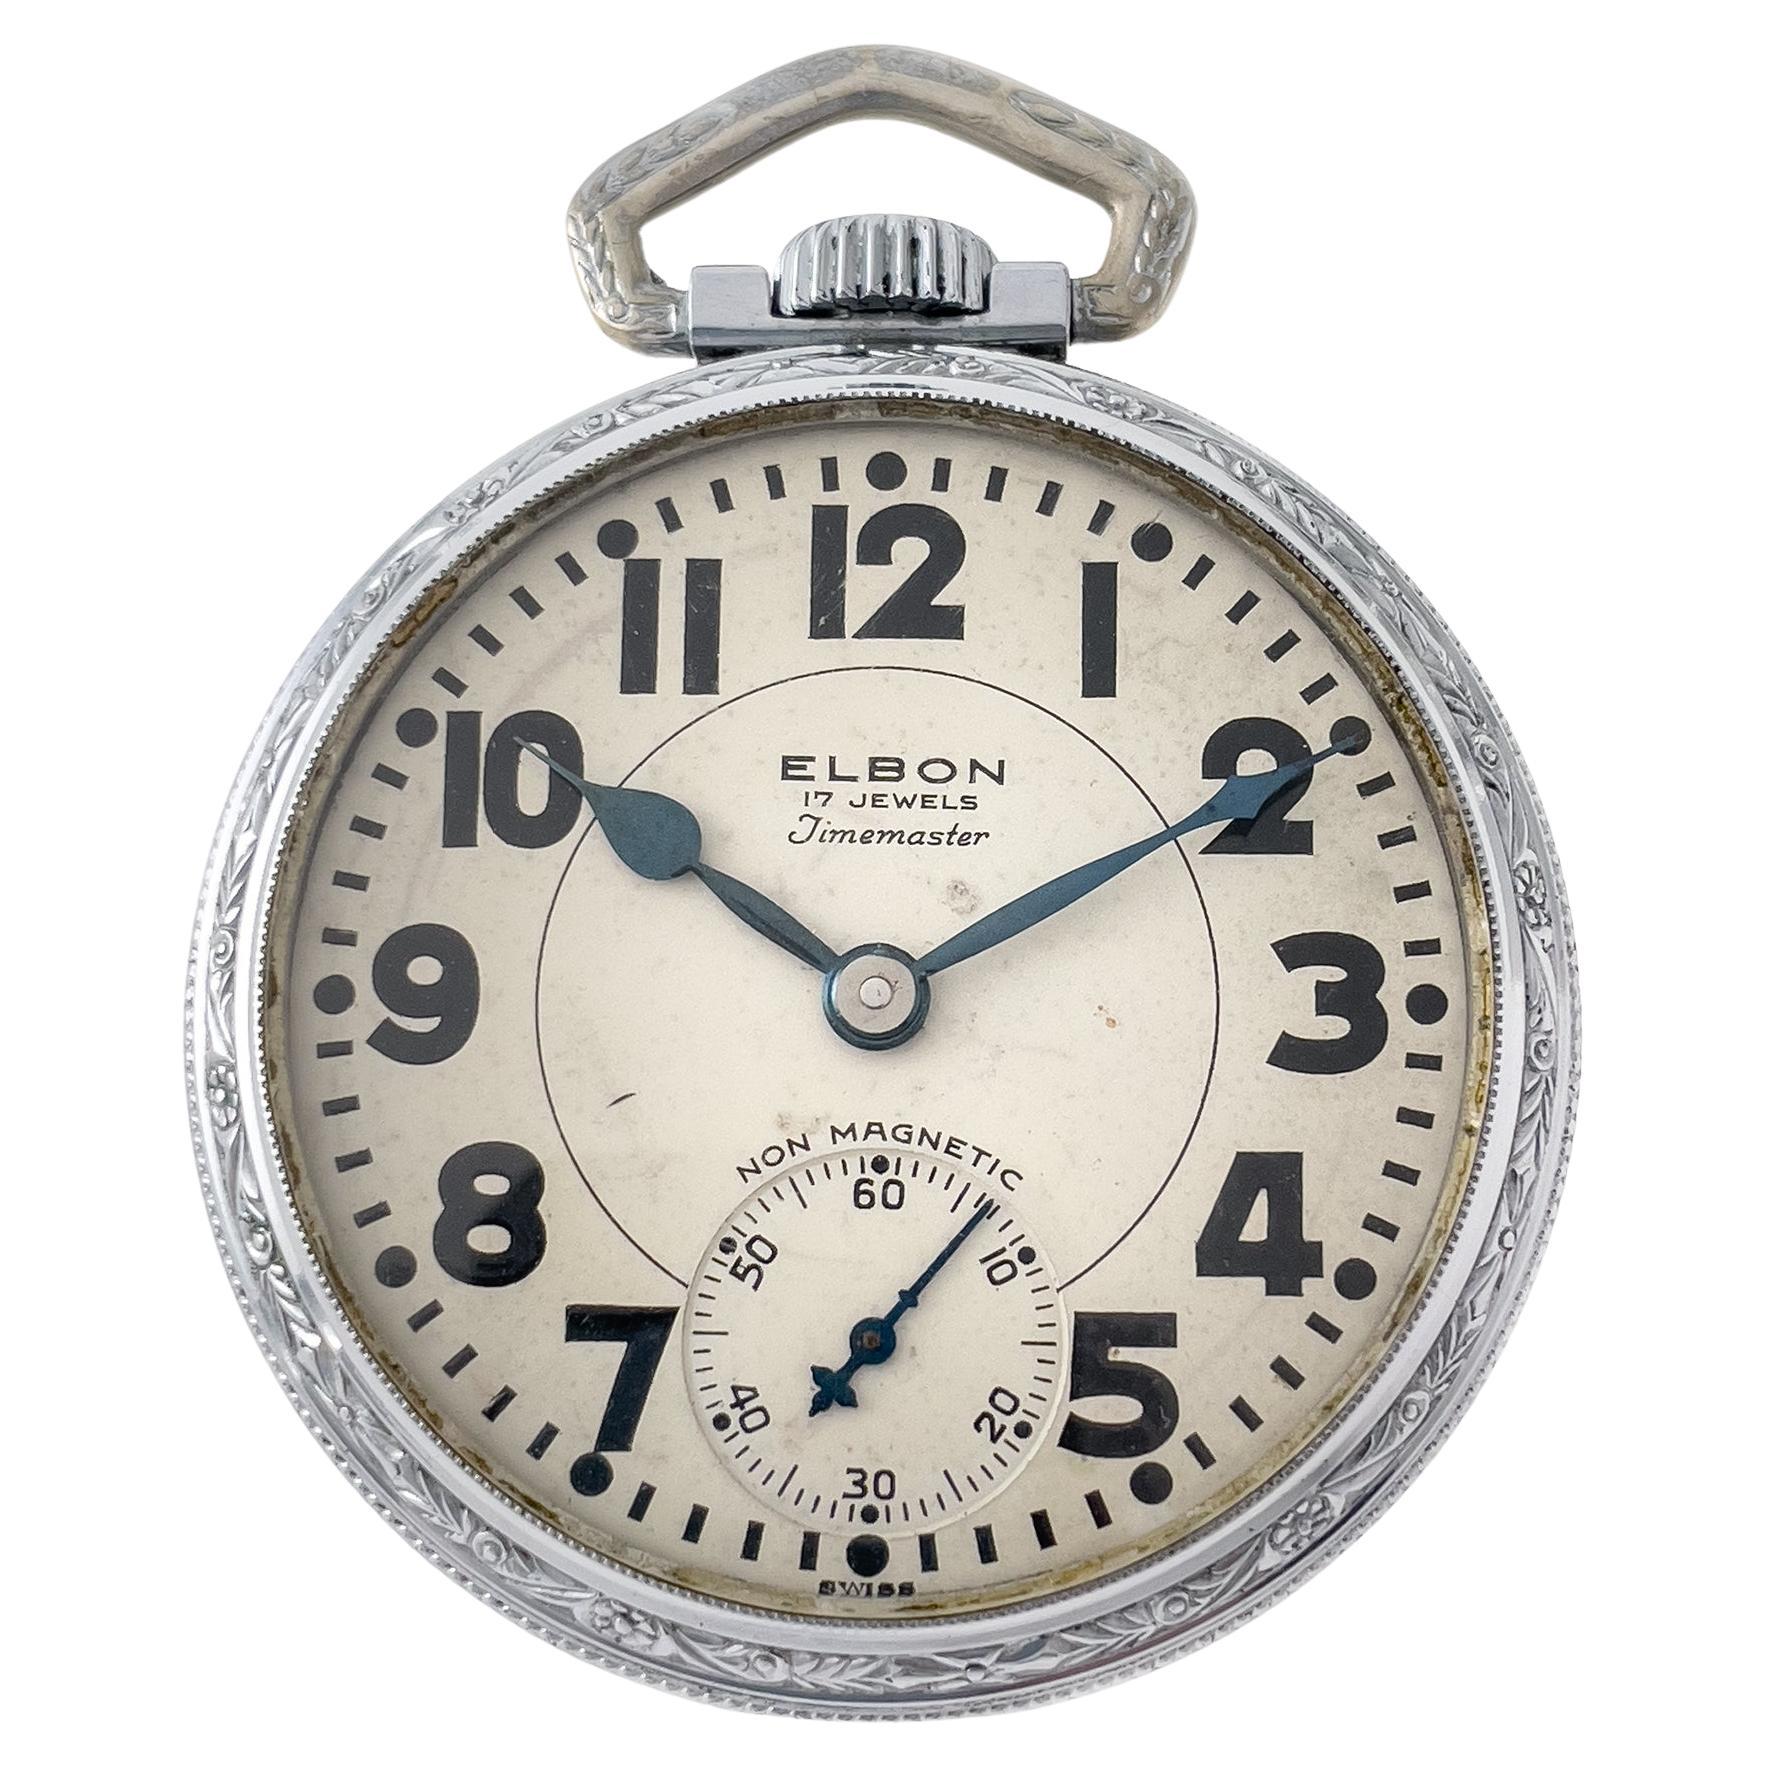 Elbon 17 Jewels Timemaster GMT Pocket Watch